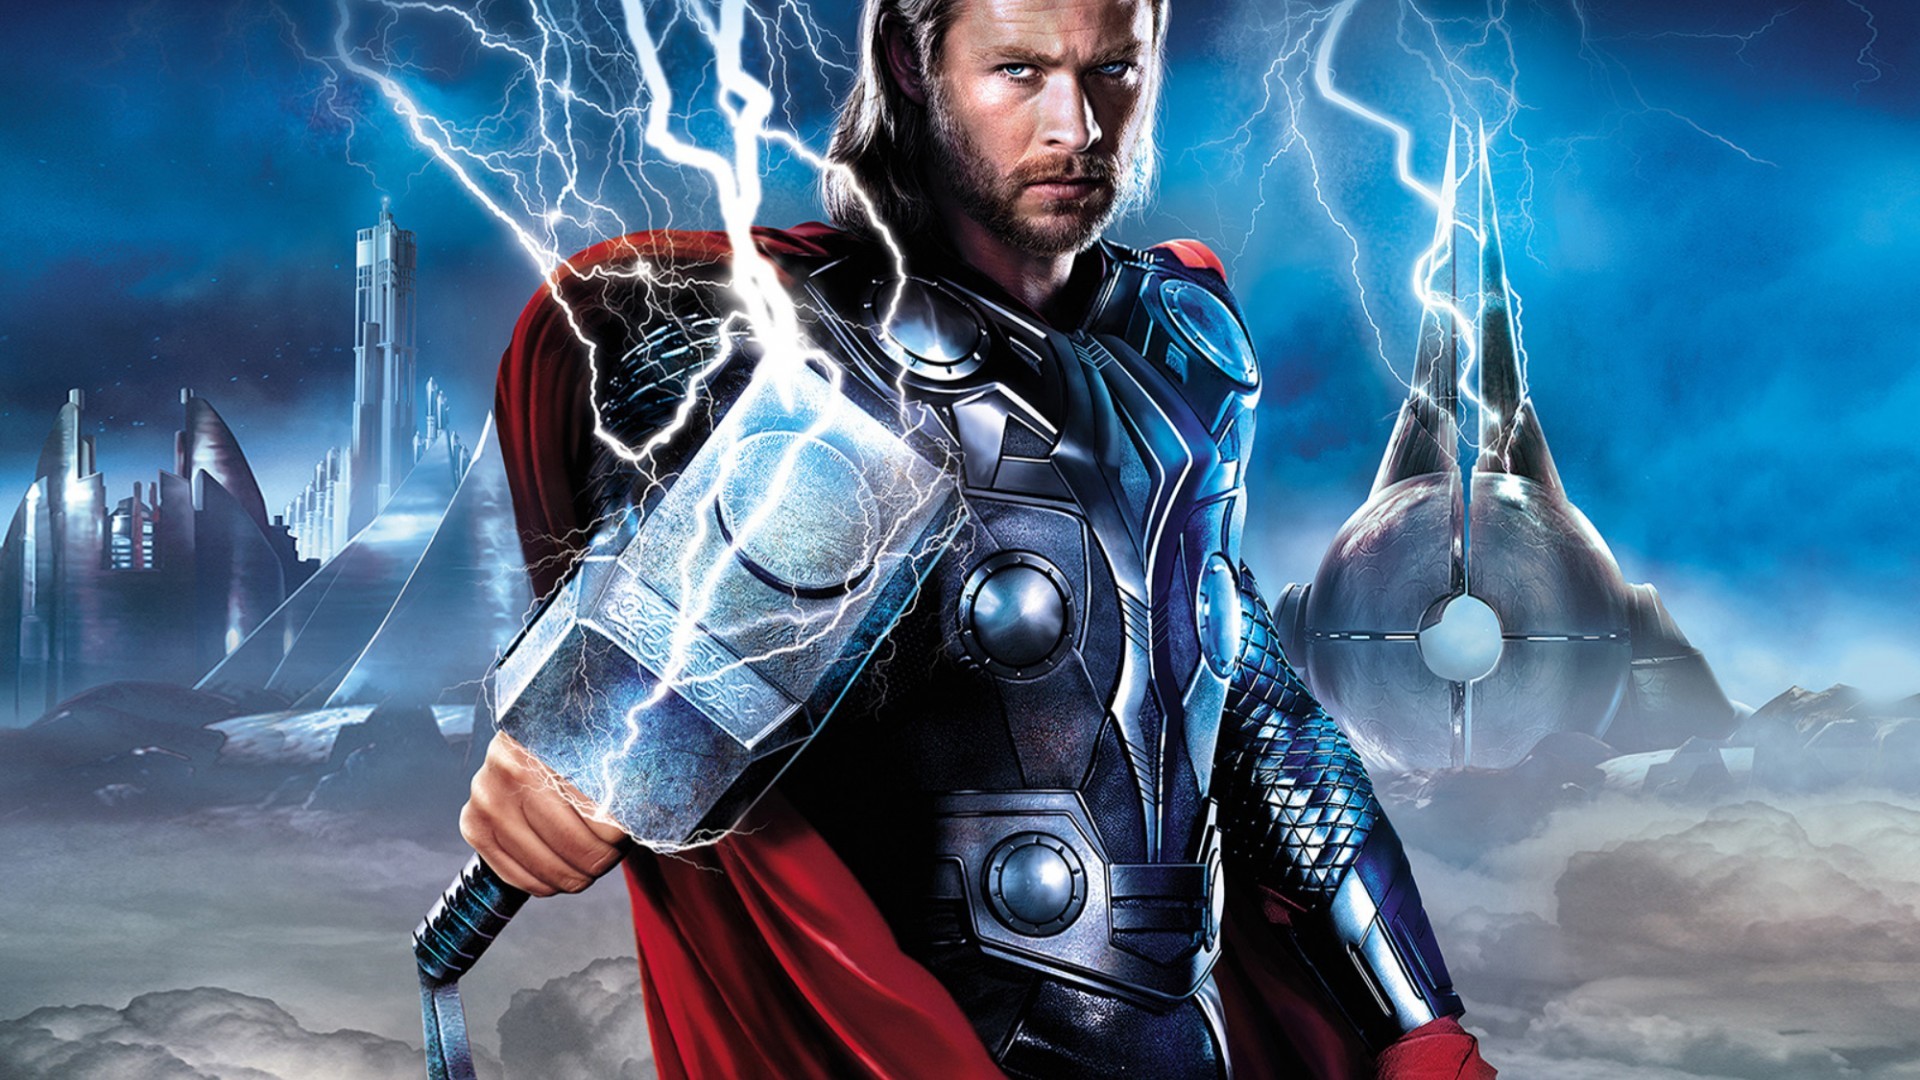 Thor Hammer Avengers HD Wallpaper Background Image